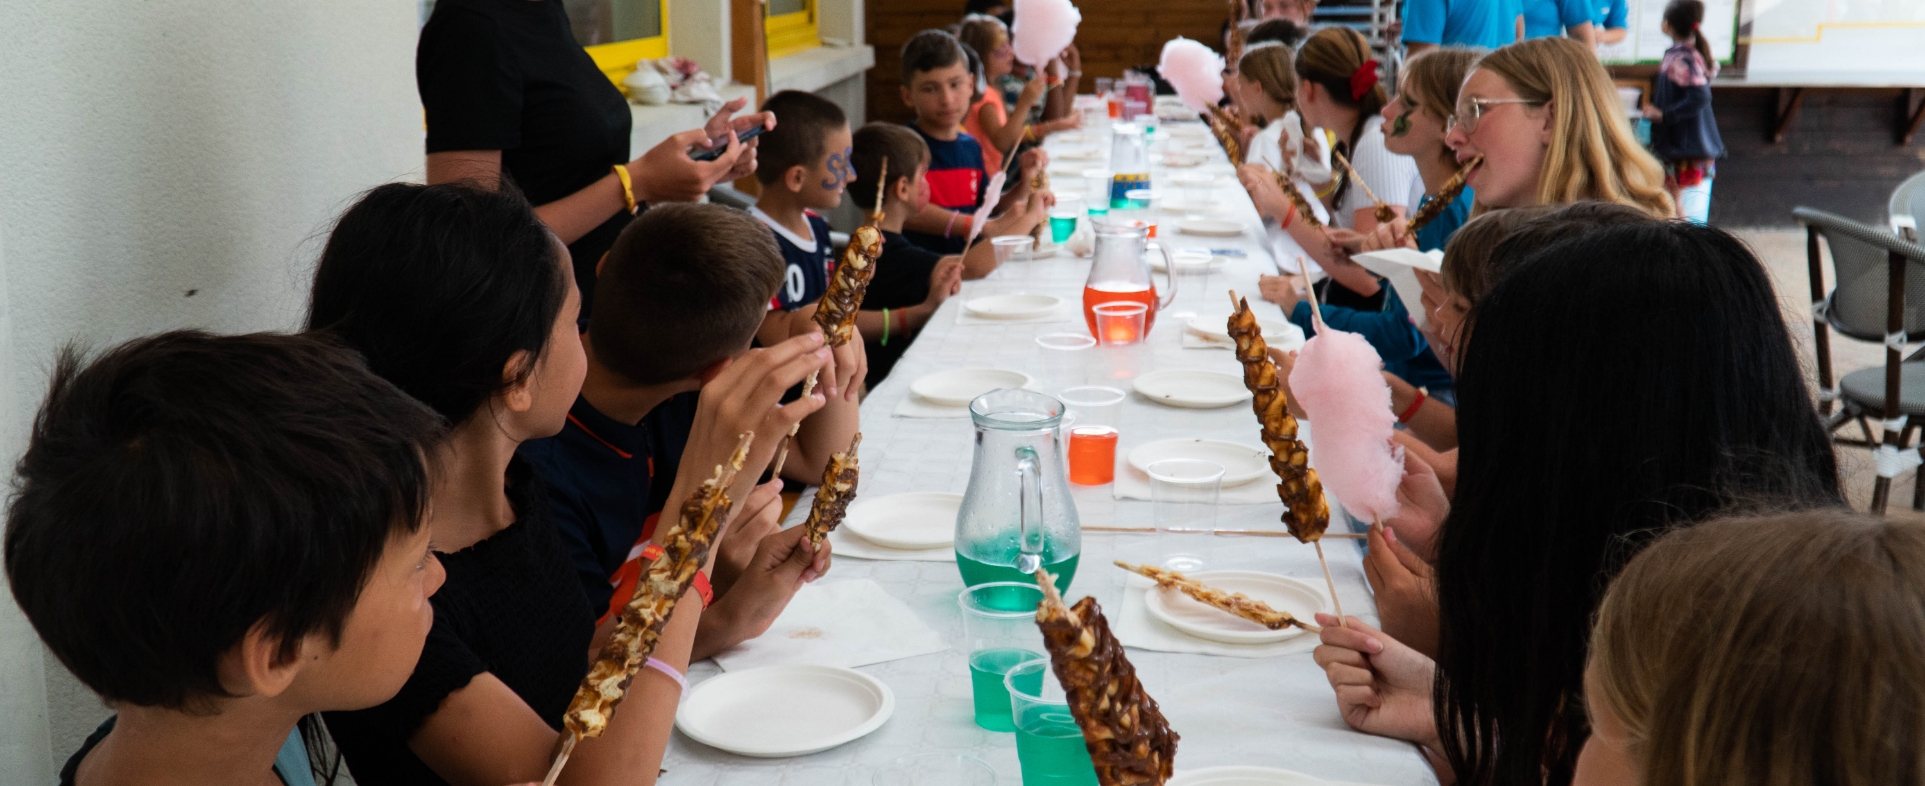 Snacks Party, children's activities at Les Bords de Loue campsite in Jura